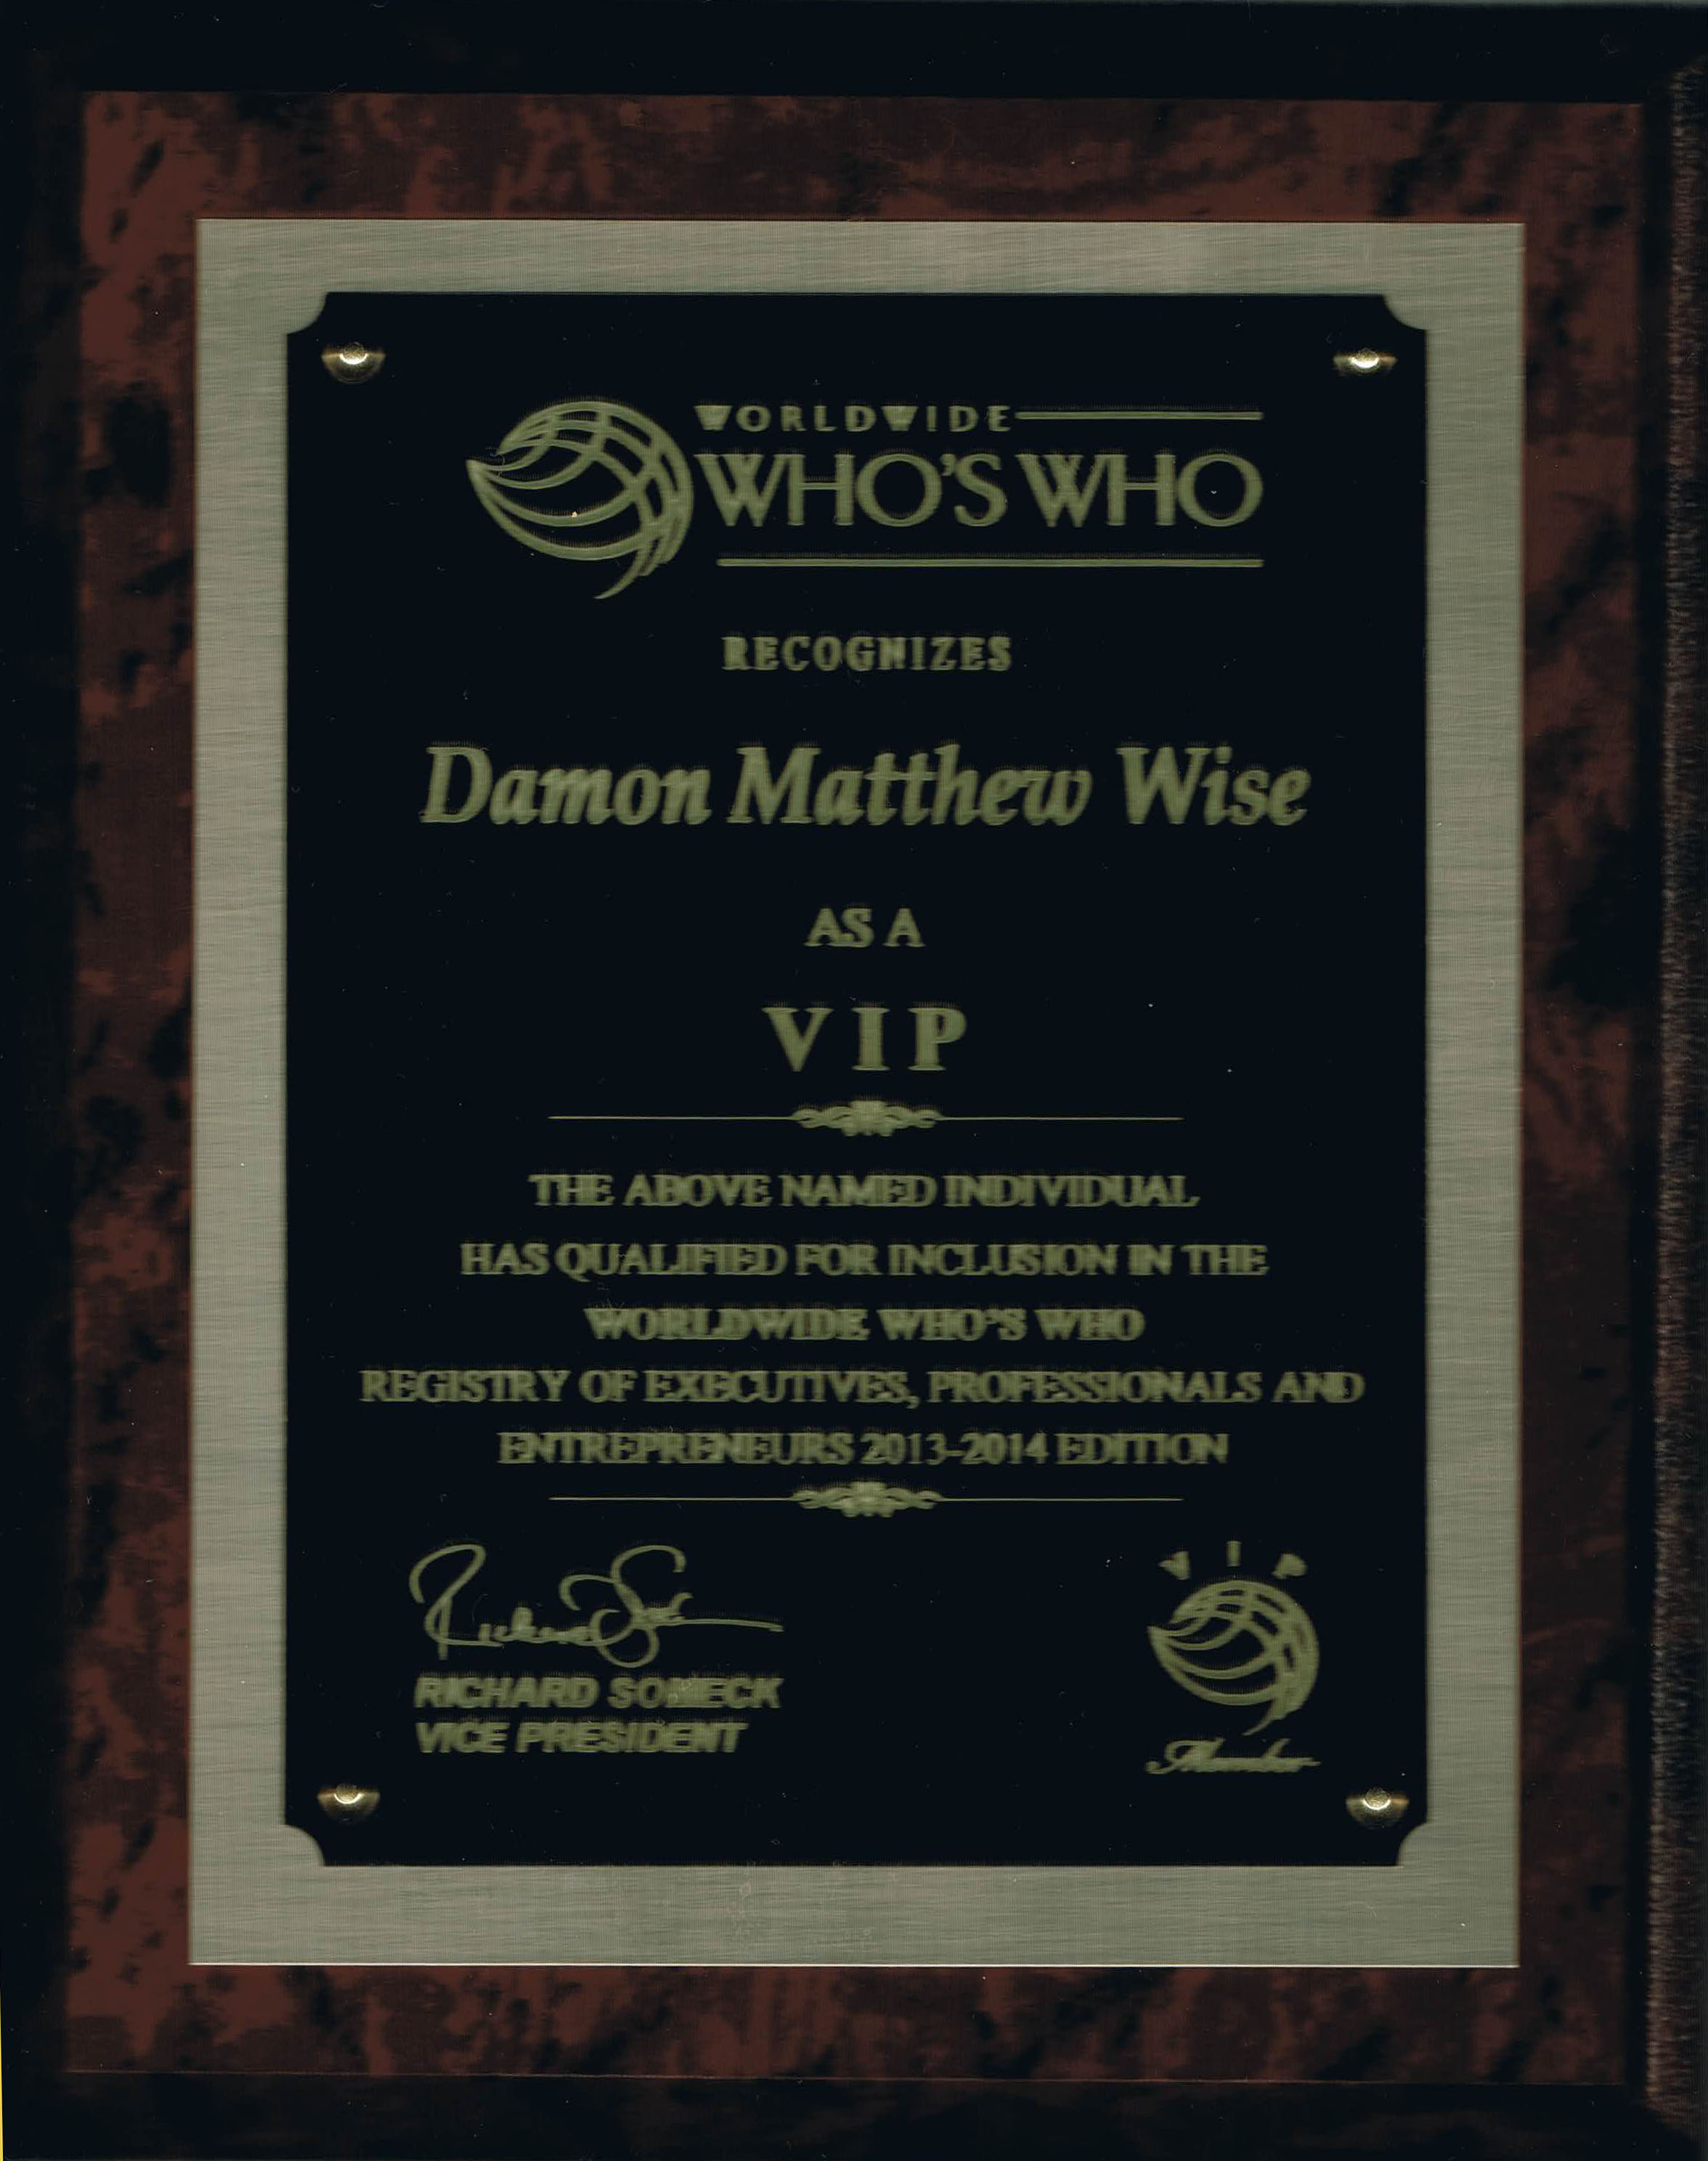 Damon Matthew Wise- Worlfwide Who's Who VIP award 2013/4